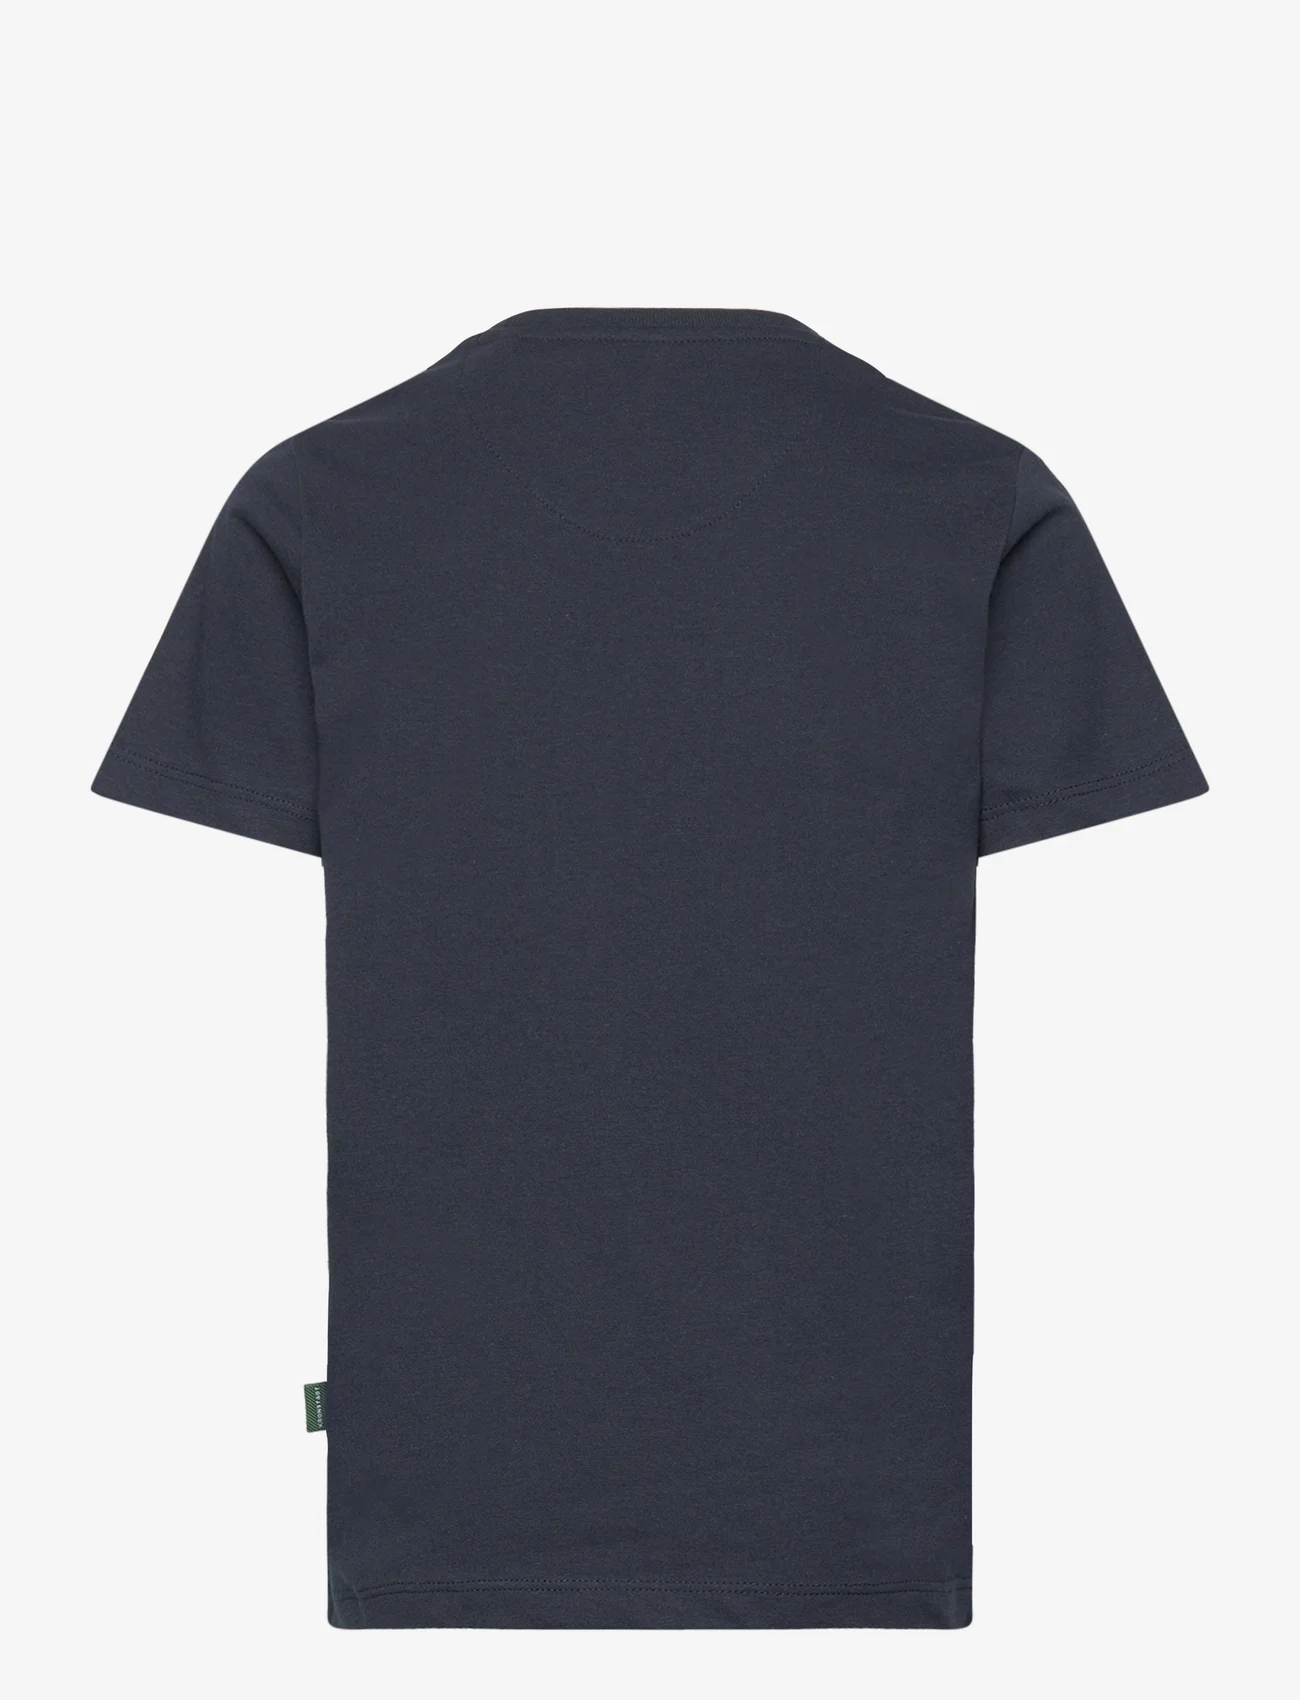 Kronstadt - Timmi Kids Organic/Recycled t-shirt - short-sleeved - navy - 1